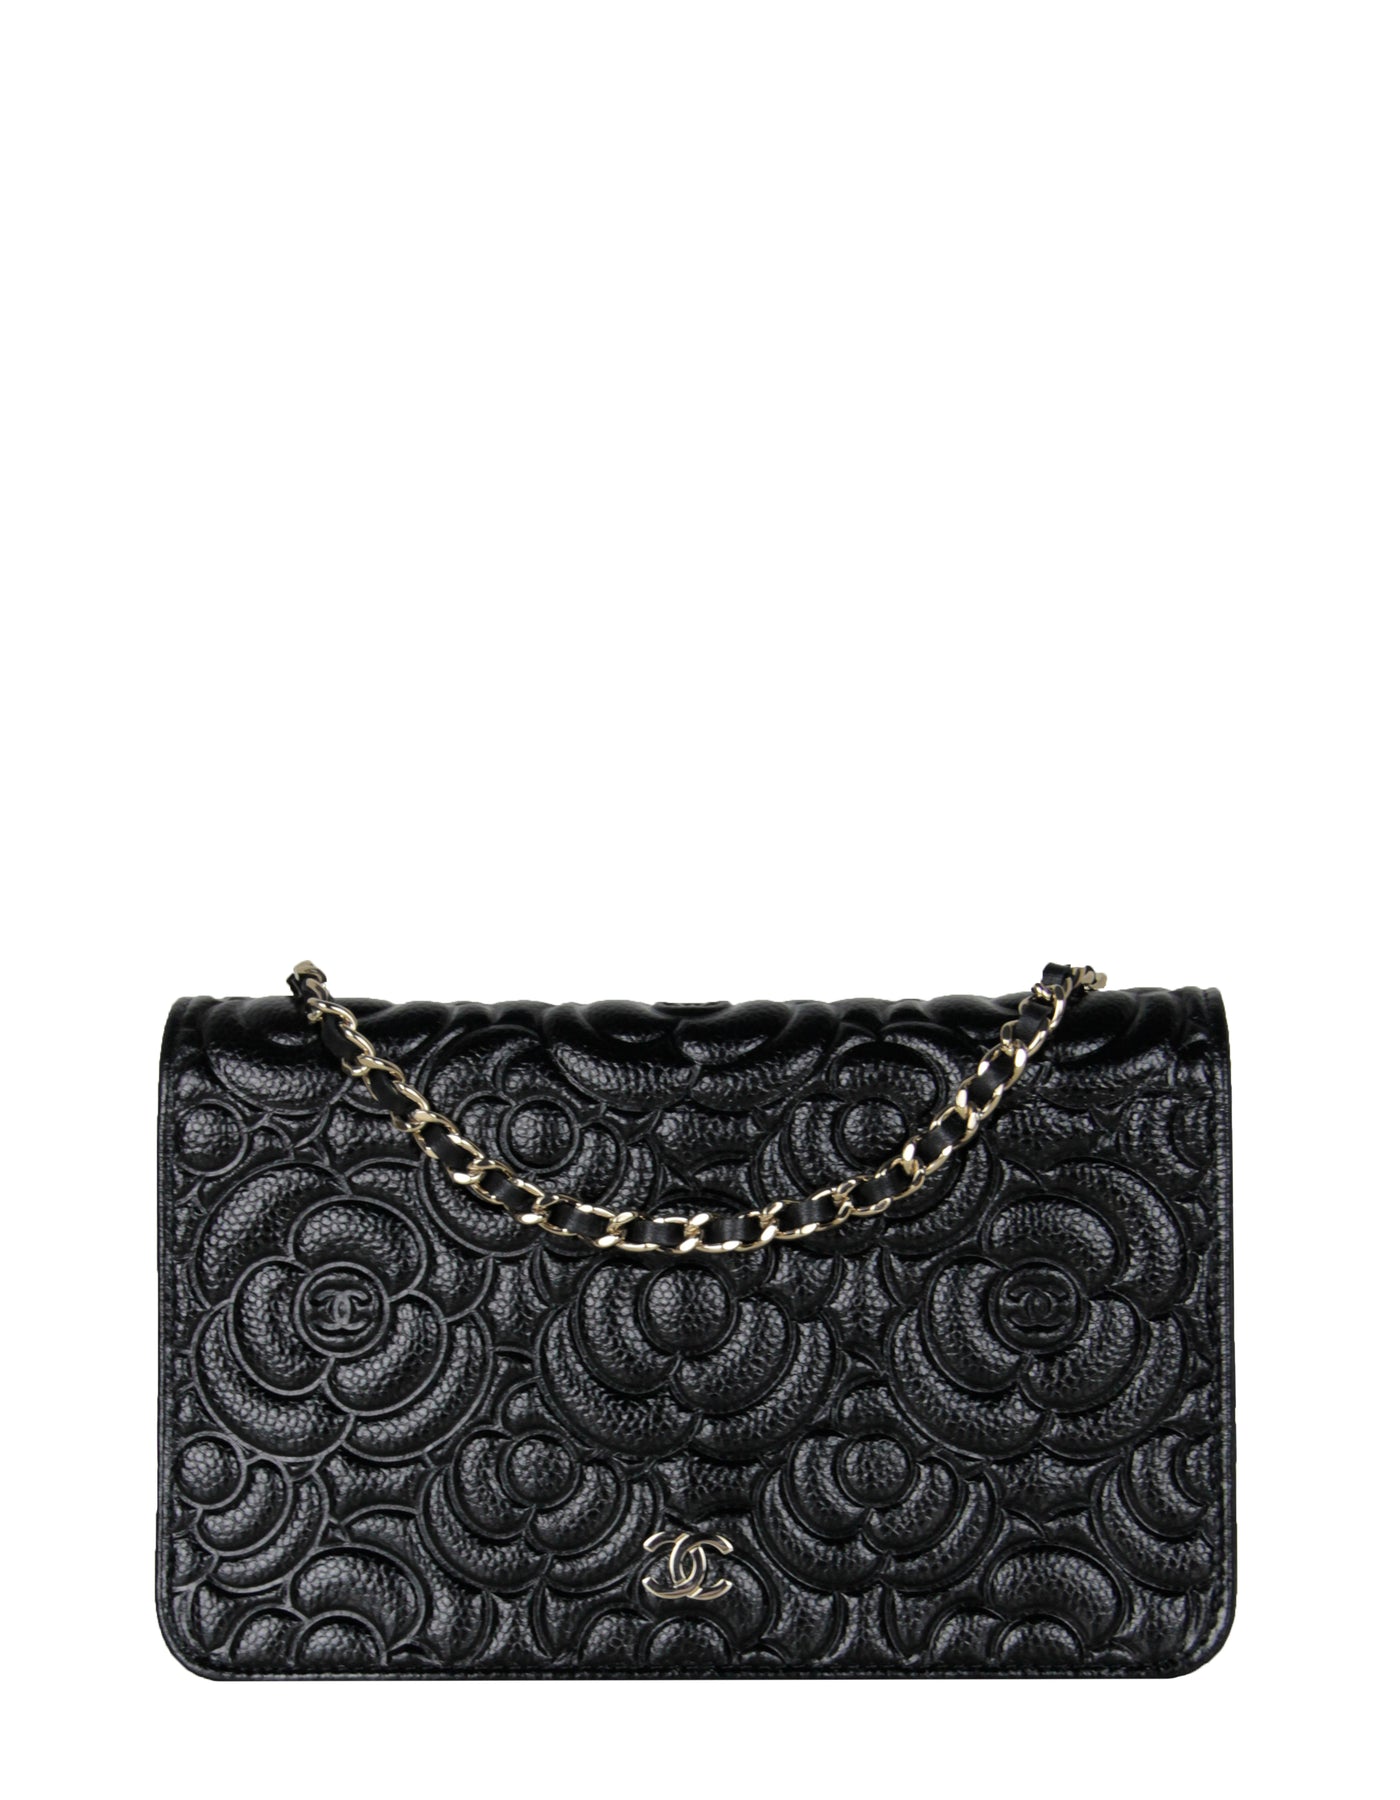 Chanel Black Caviar Camellia Wallet on Chain WOC Crossbody Bag